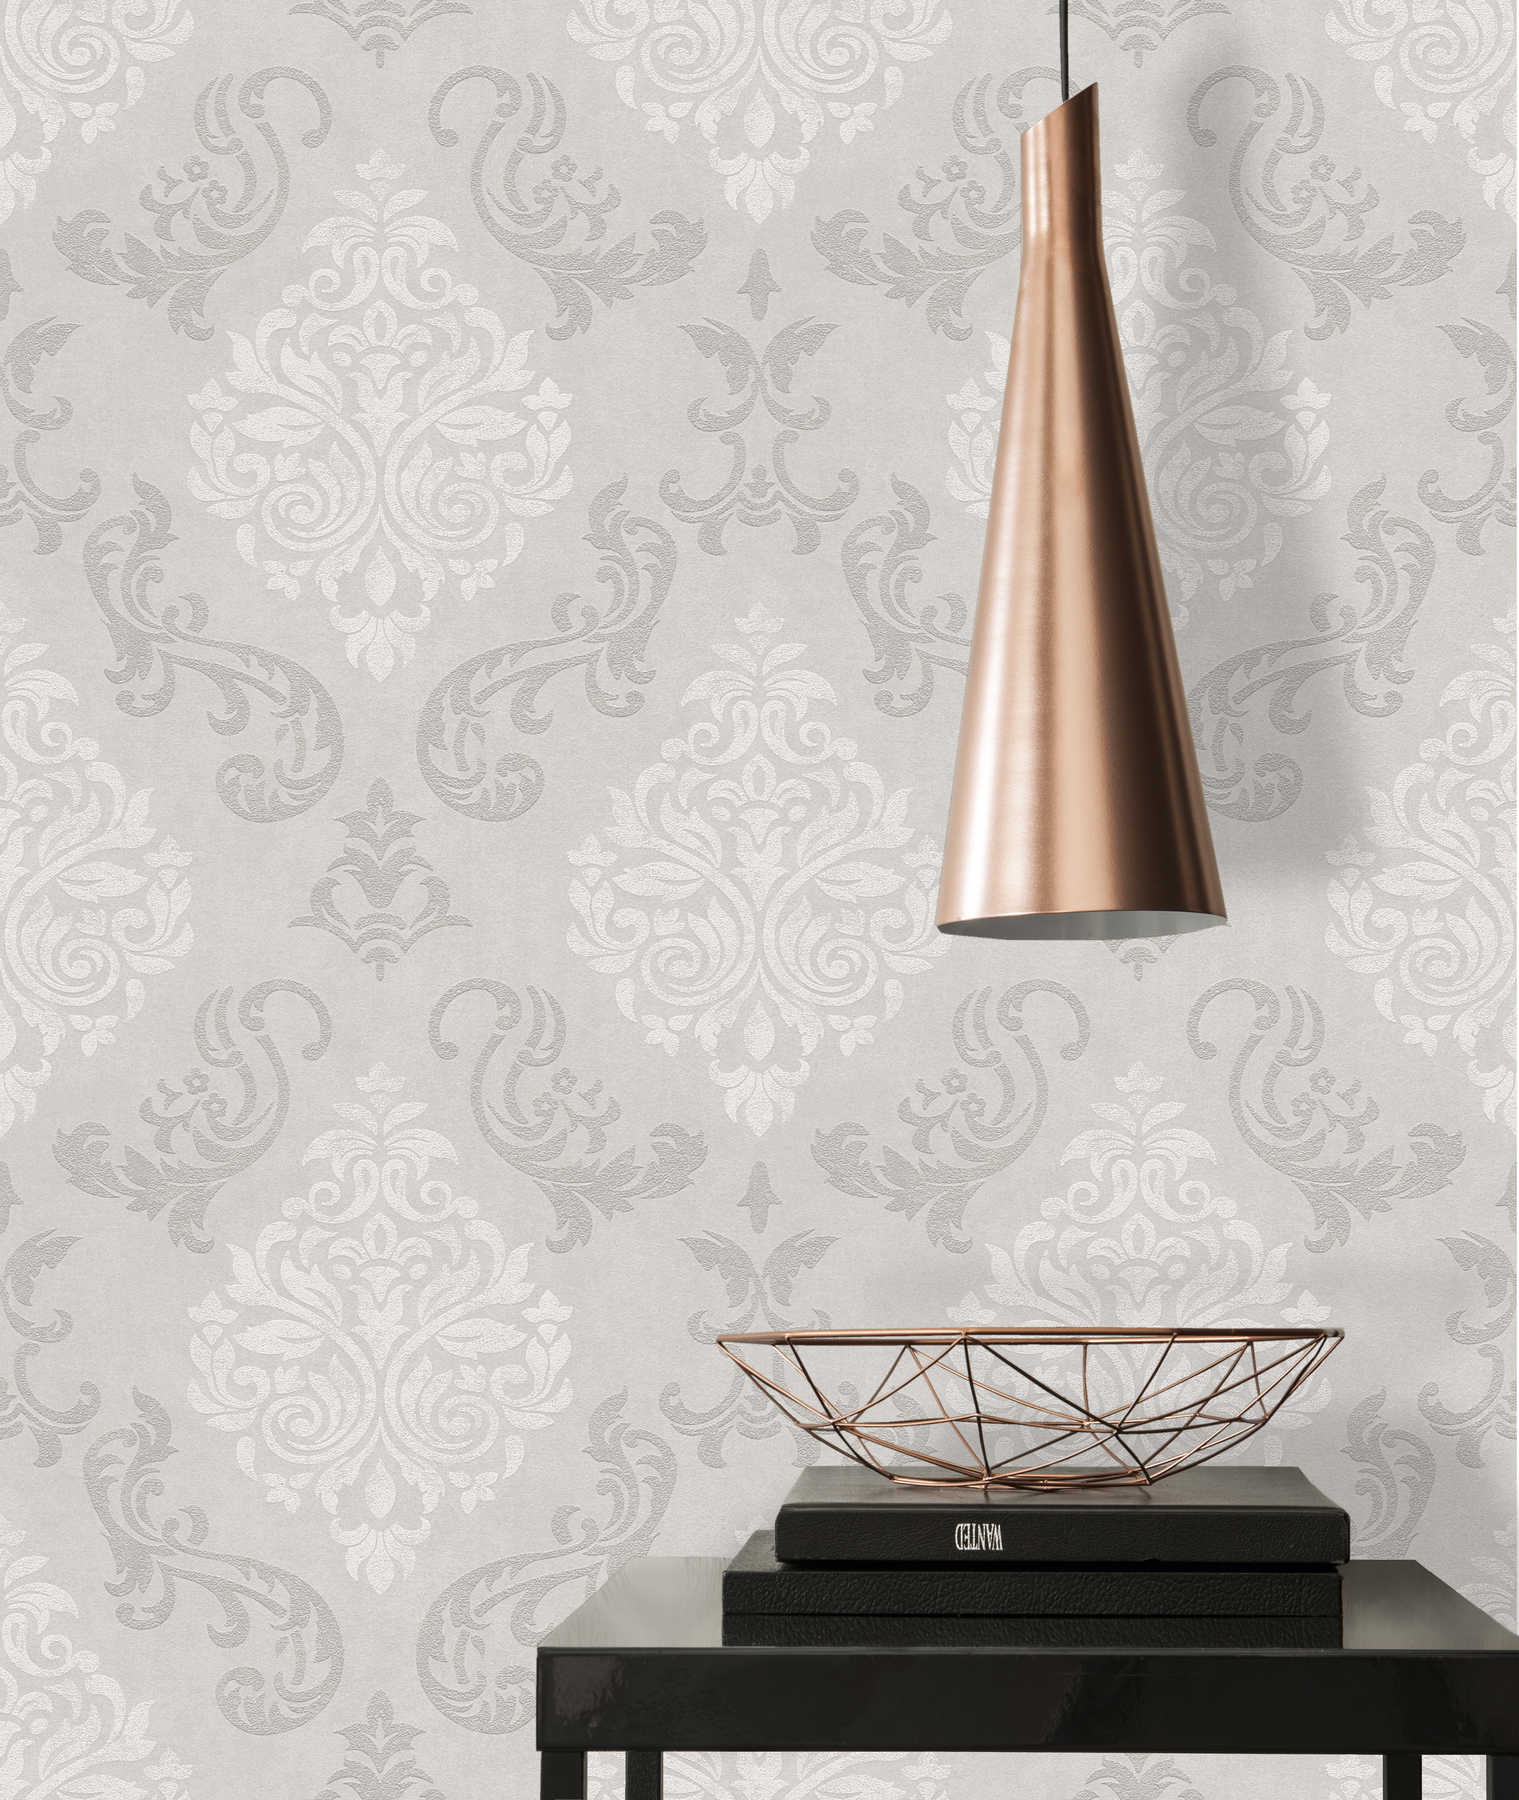             Ornaments wallpaper baroque style with glitter effect - beige, cream, metallic
        